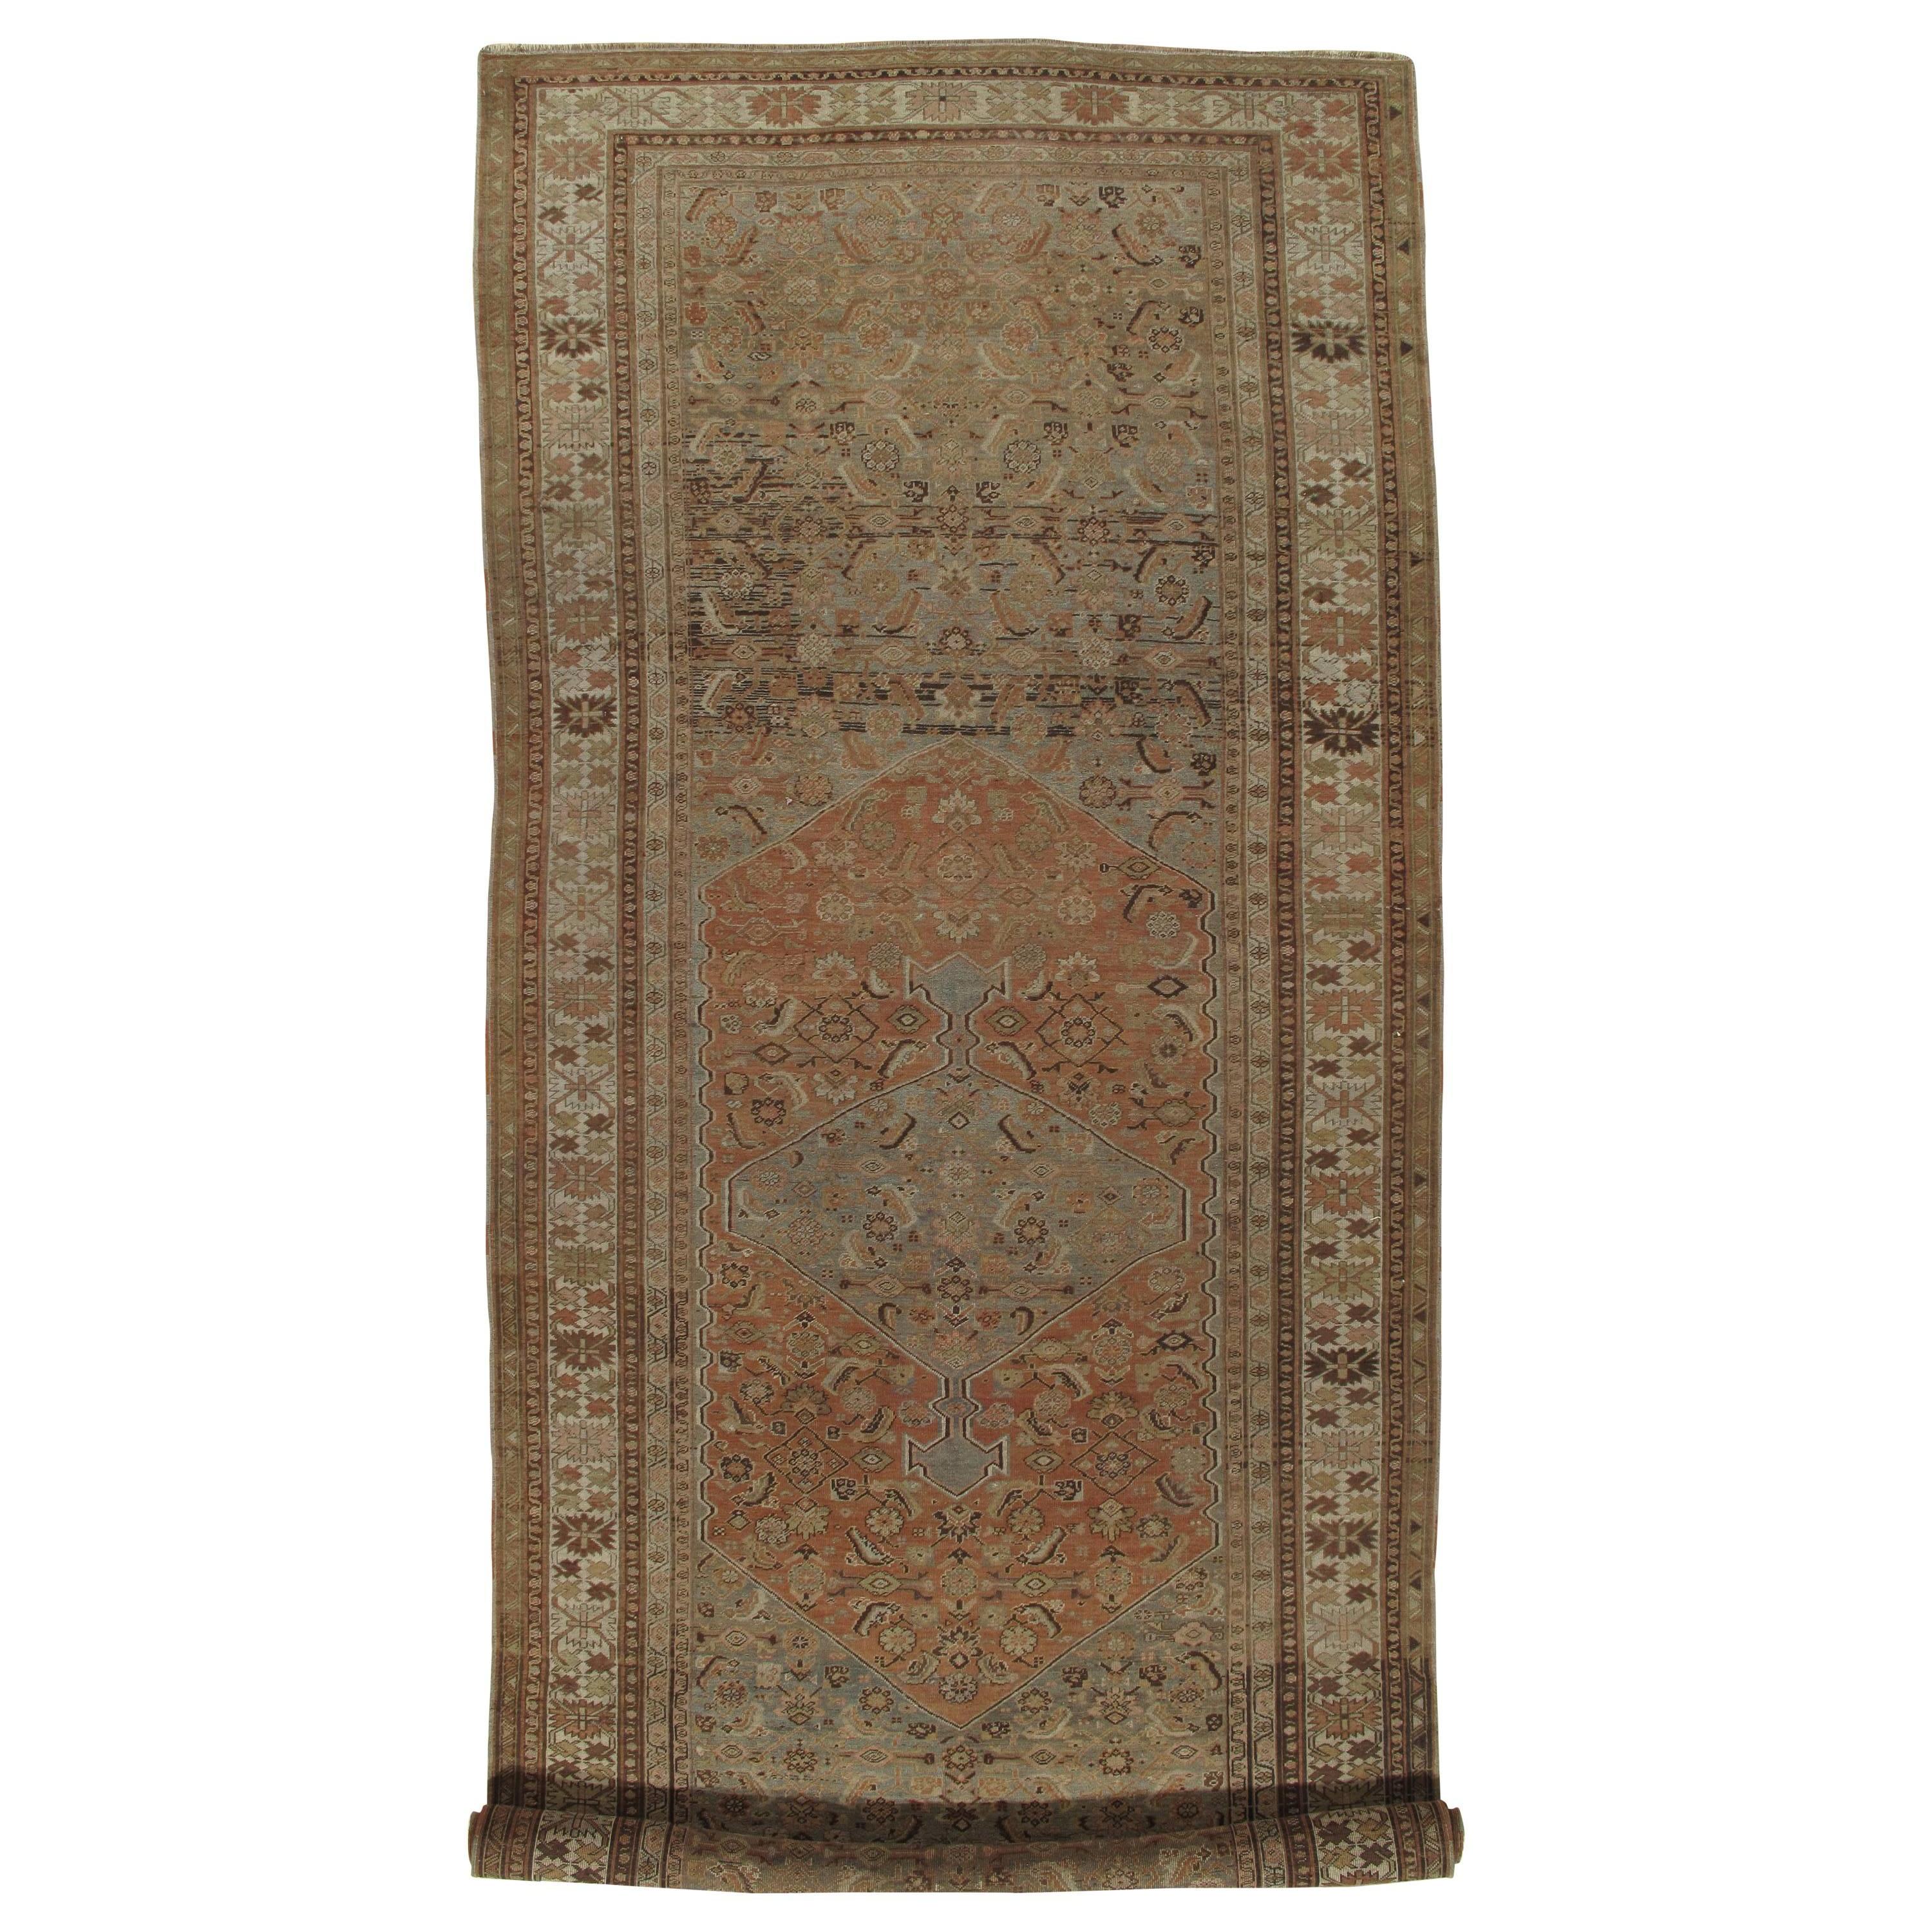 Antique Gallery-Size Bijar Runner, Handmade Oriental Rug, Taupe, Terracotta